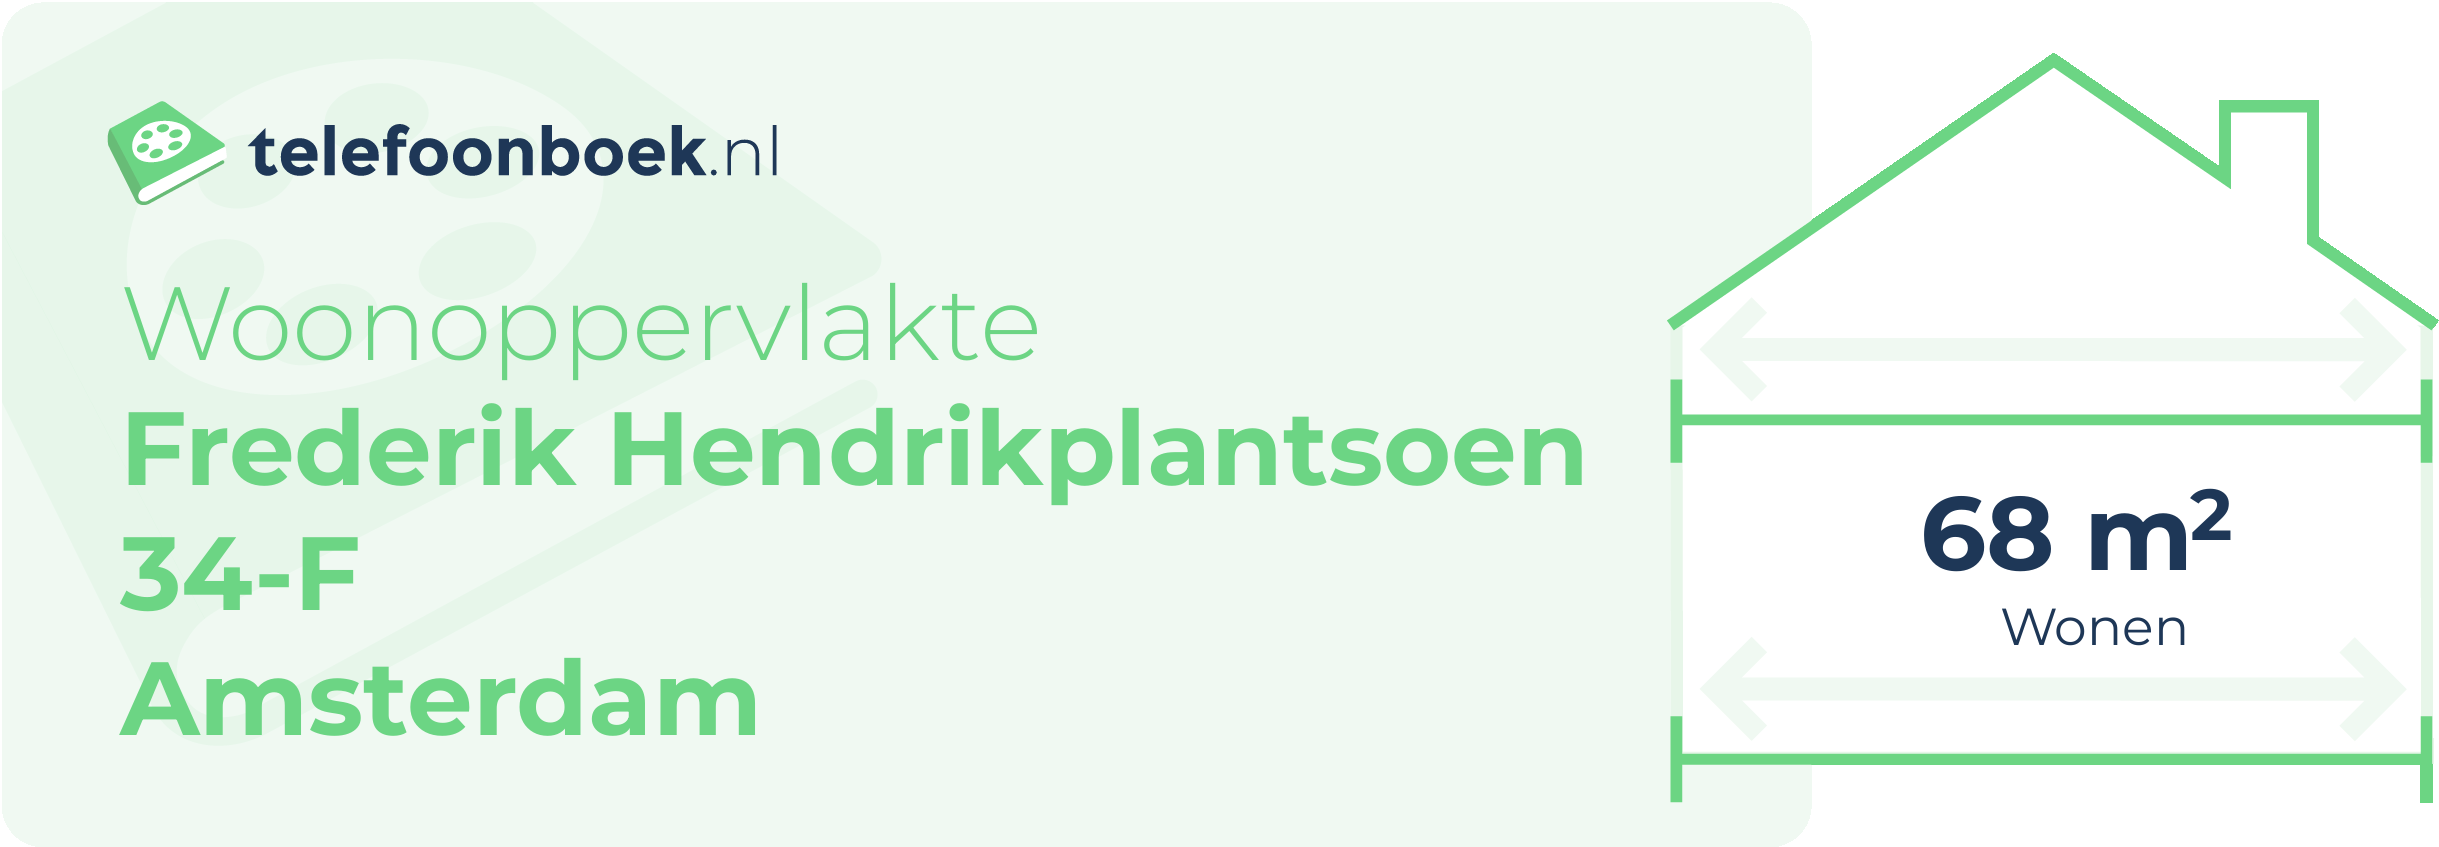 Woonoppervlakte Frederik Hendrikplantsoen 34-F Amsterdam